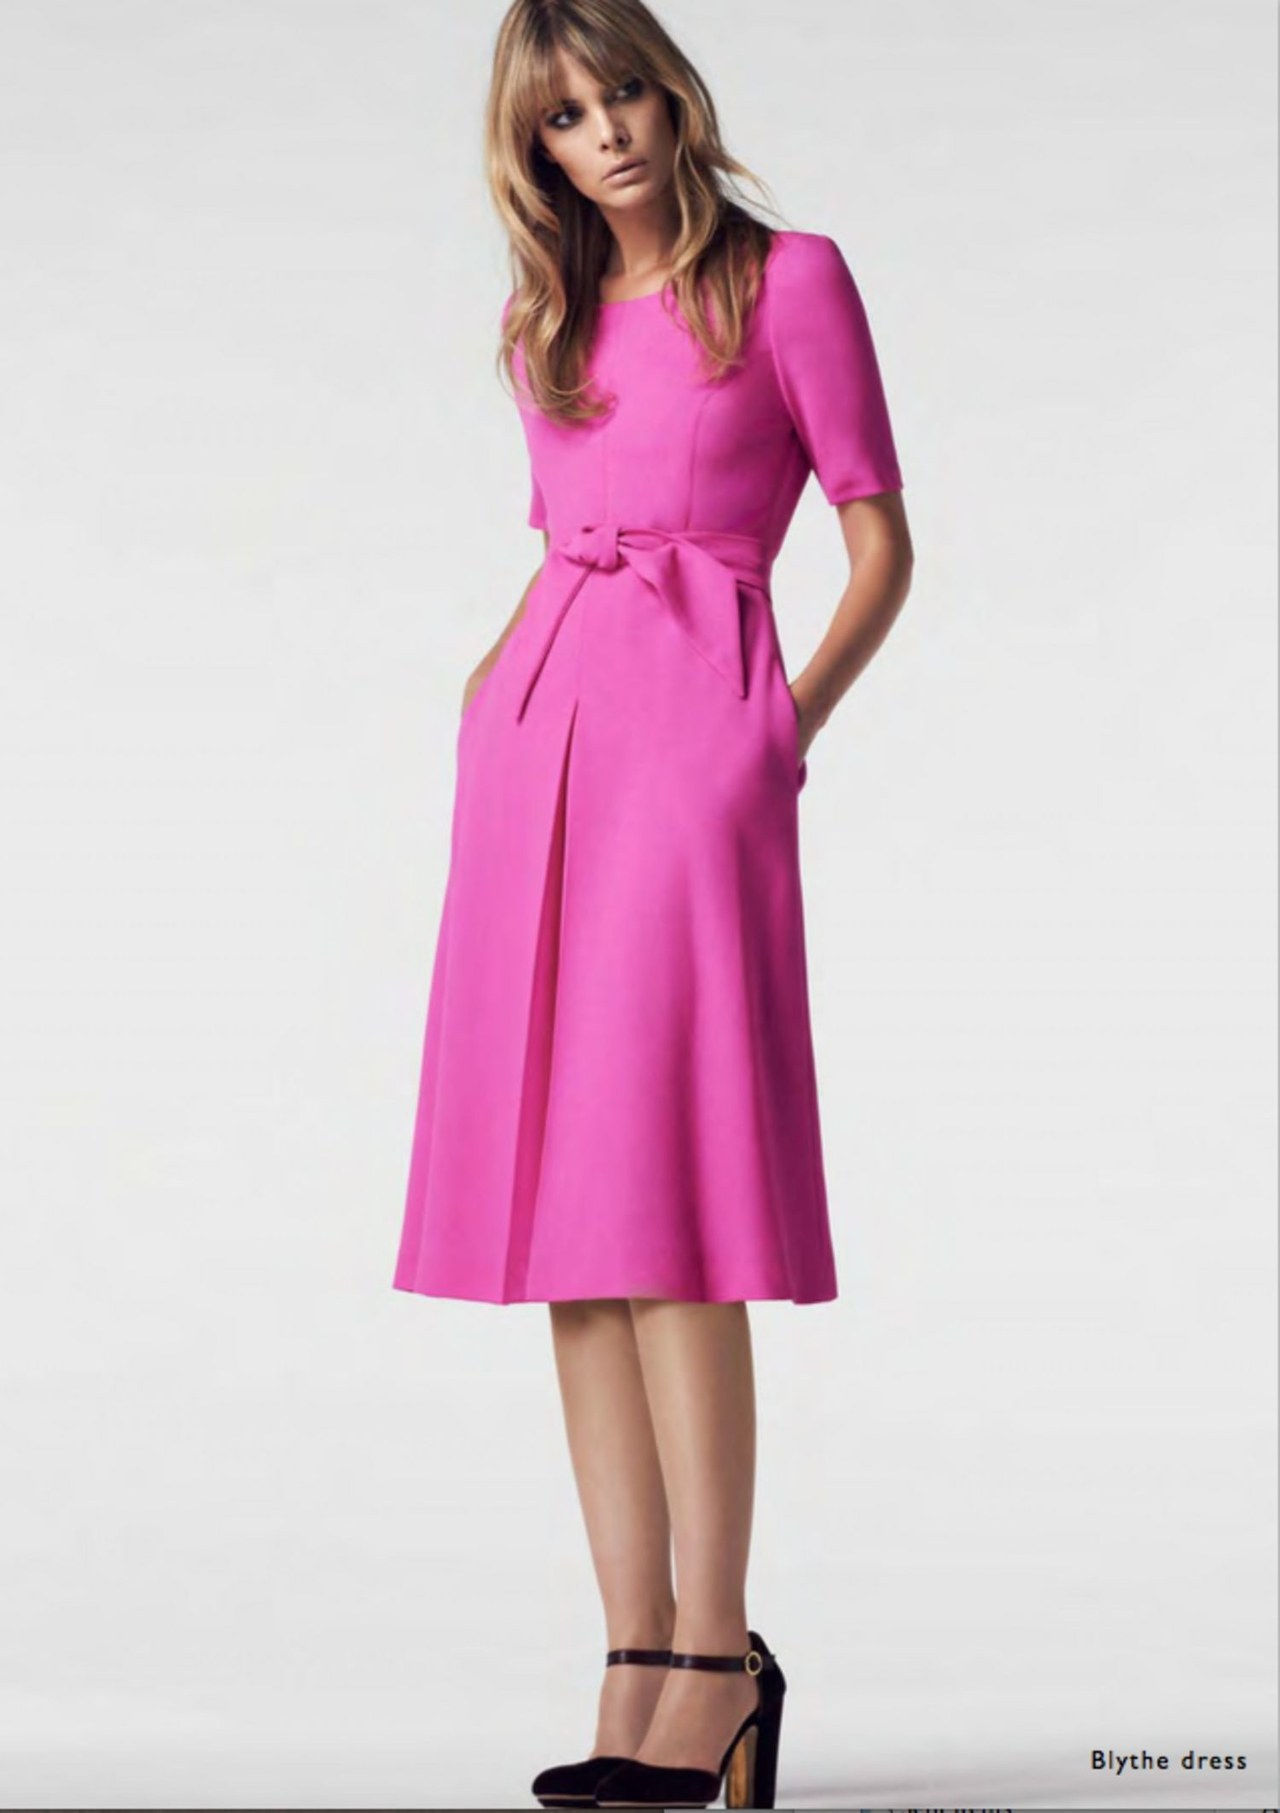 cabra pink dress